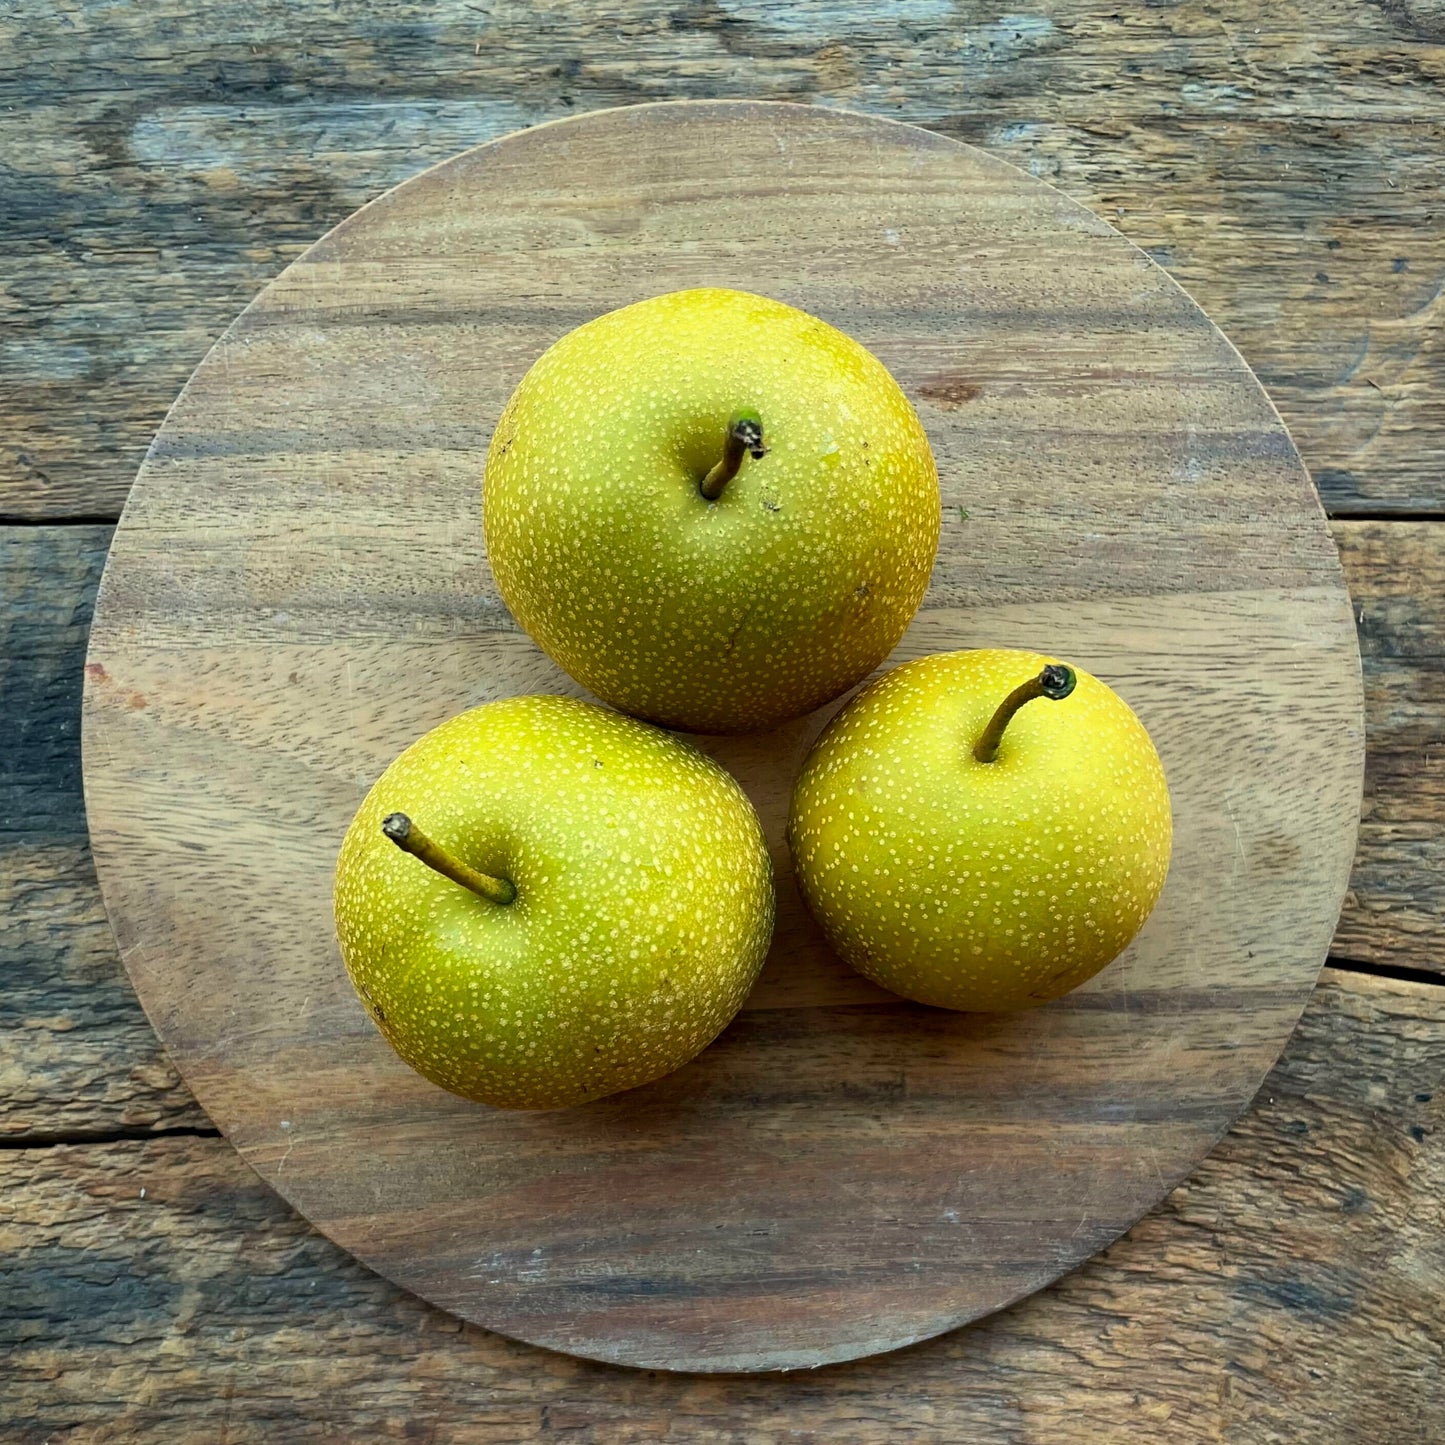 ETHS Asian Pears - 16 oz